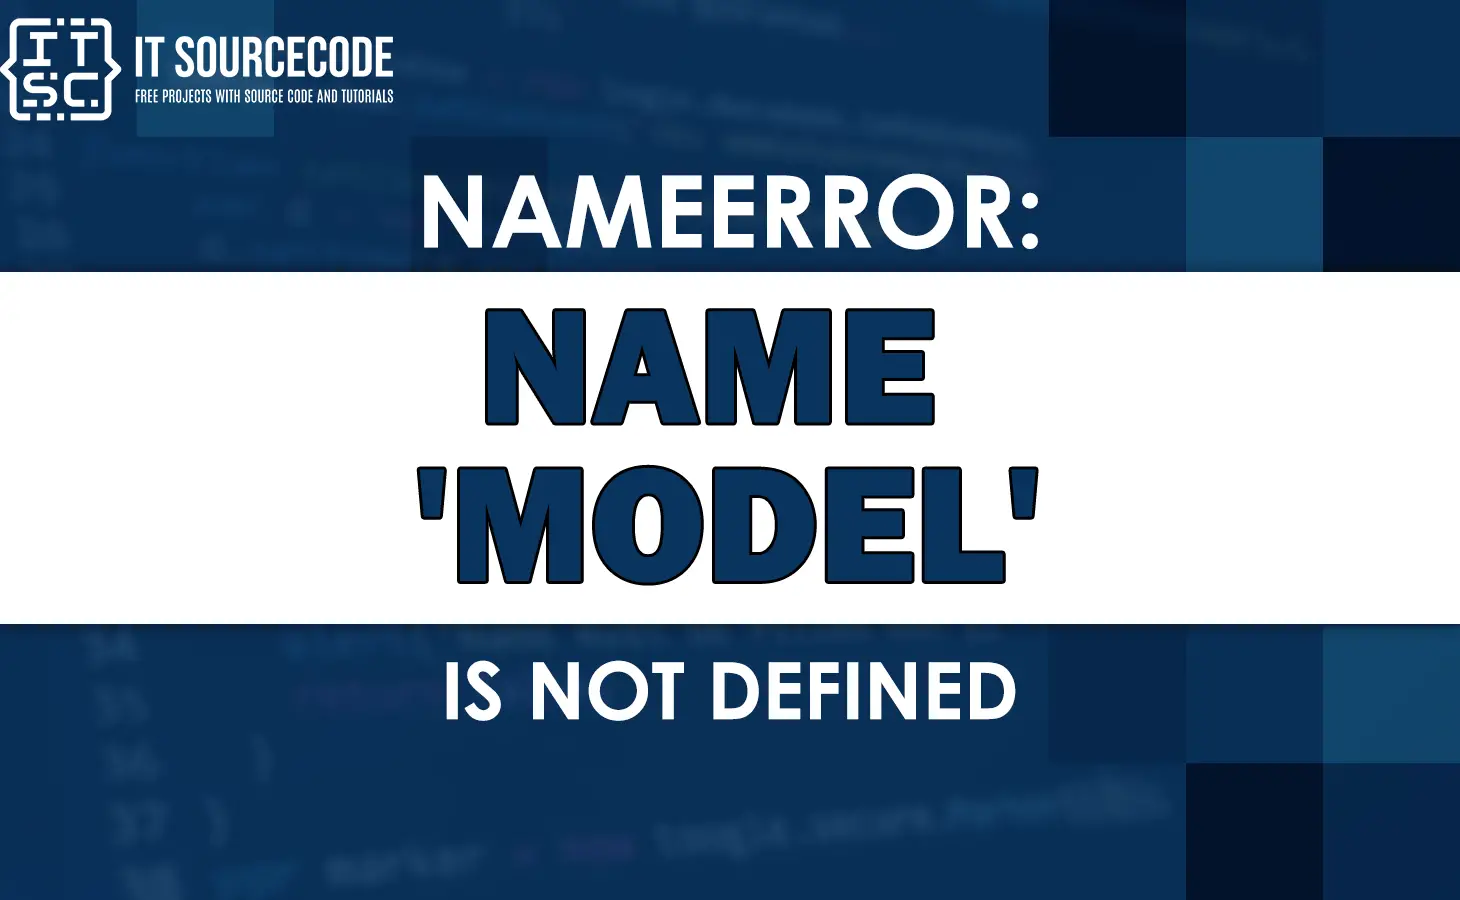 Nameerror name 'model' is not defined